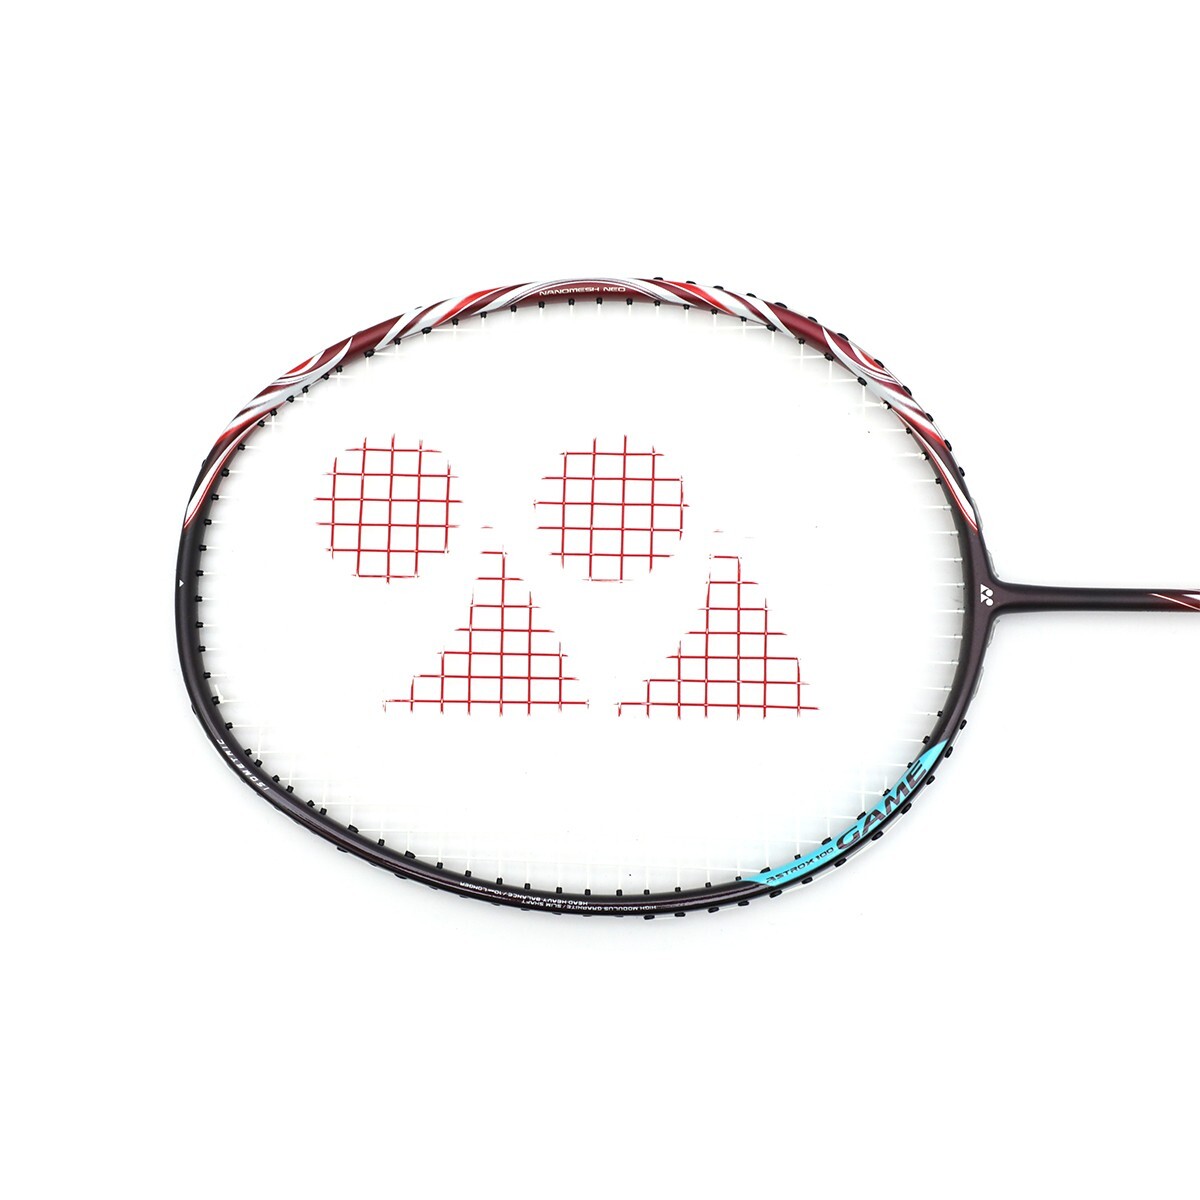 Yonex Badminton Racket-Astrox100 Game